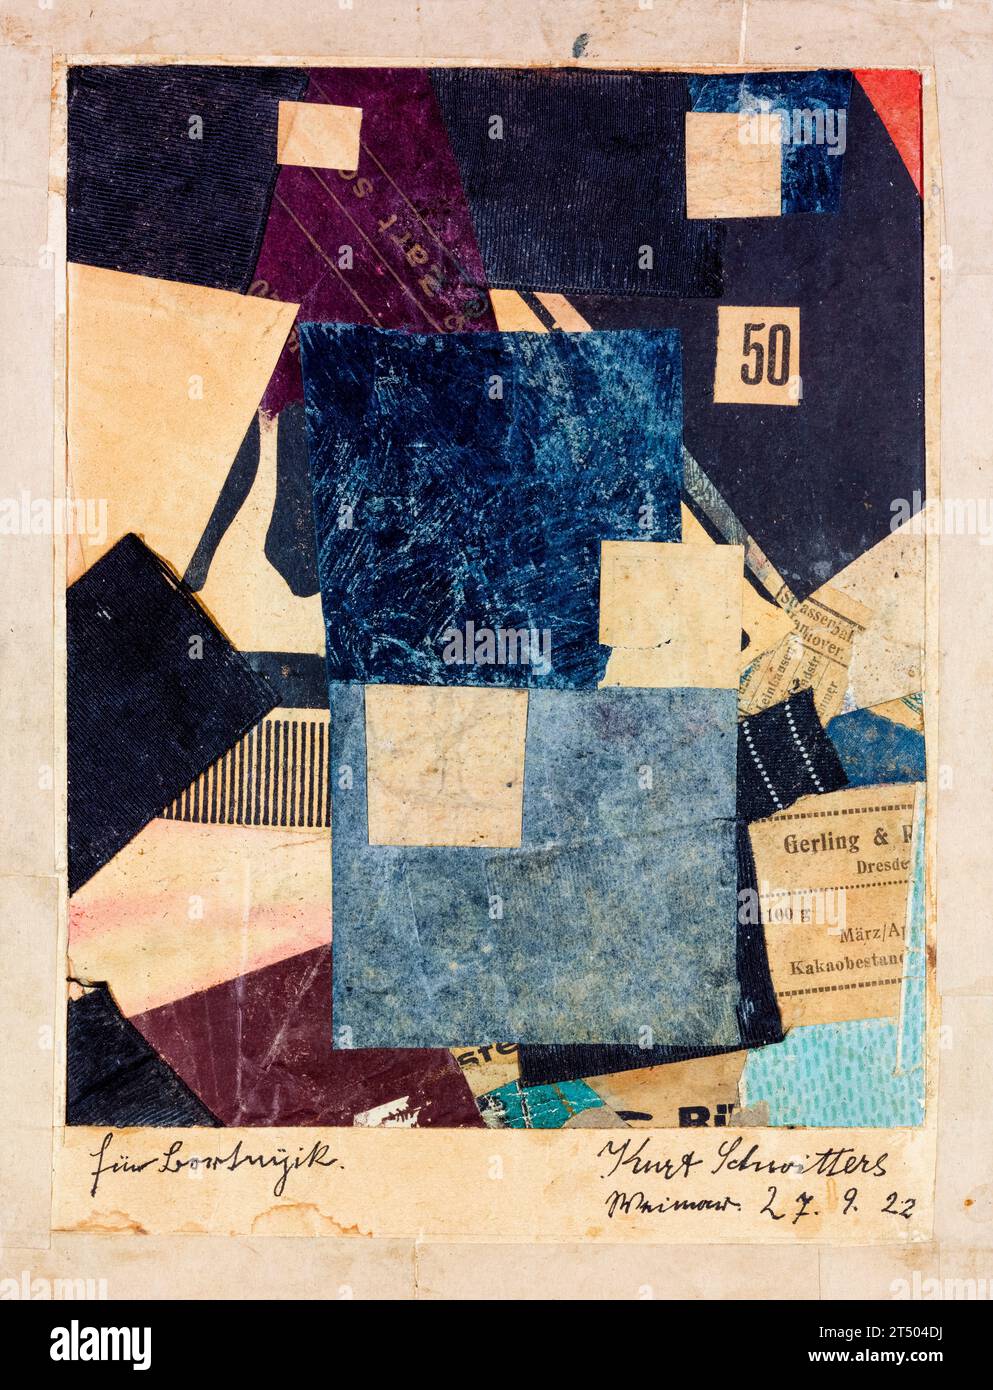 Kurt Schwitters, Merz 50: Composizione, pittura astratta e collage, 1922 Foto Stock